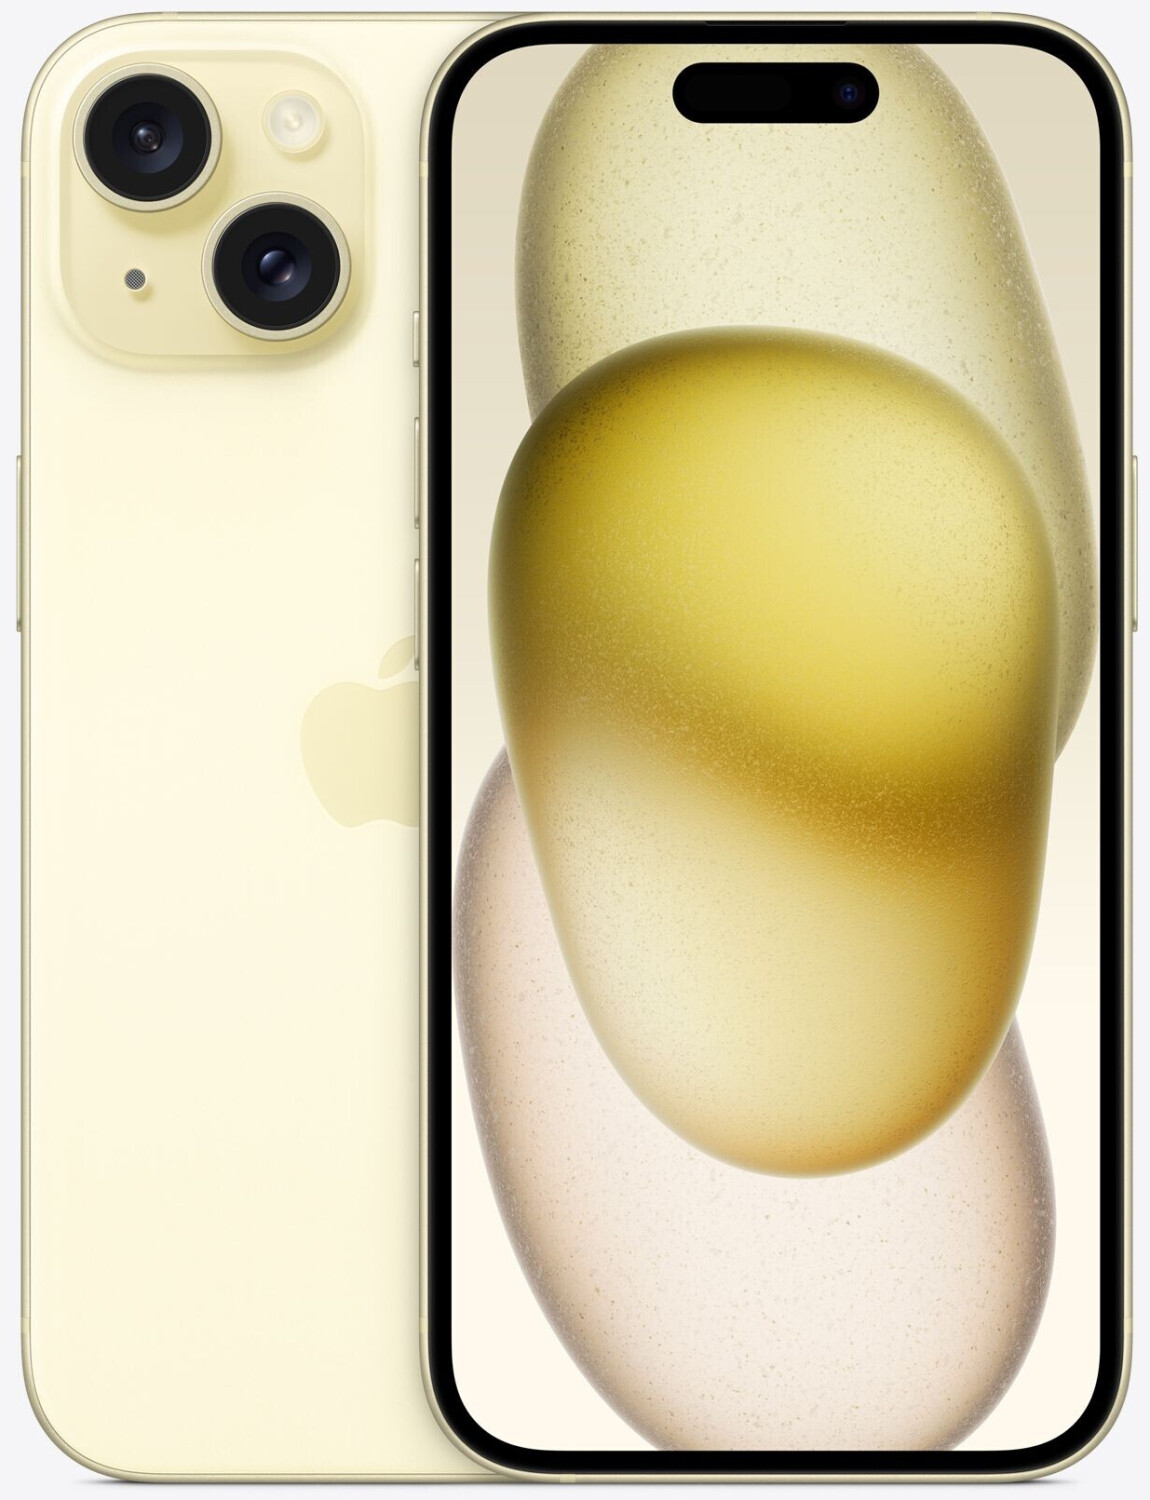 Apple iPhone 512GB Gelb bei 1.099,90 € Preisvergleich 15 ab 